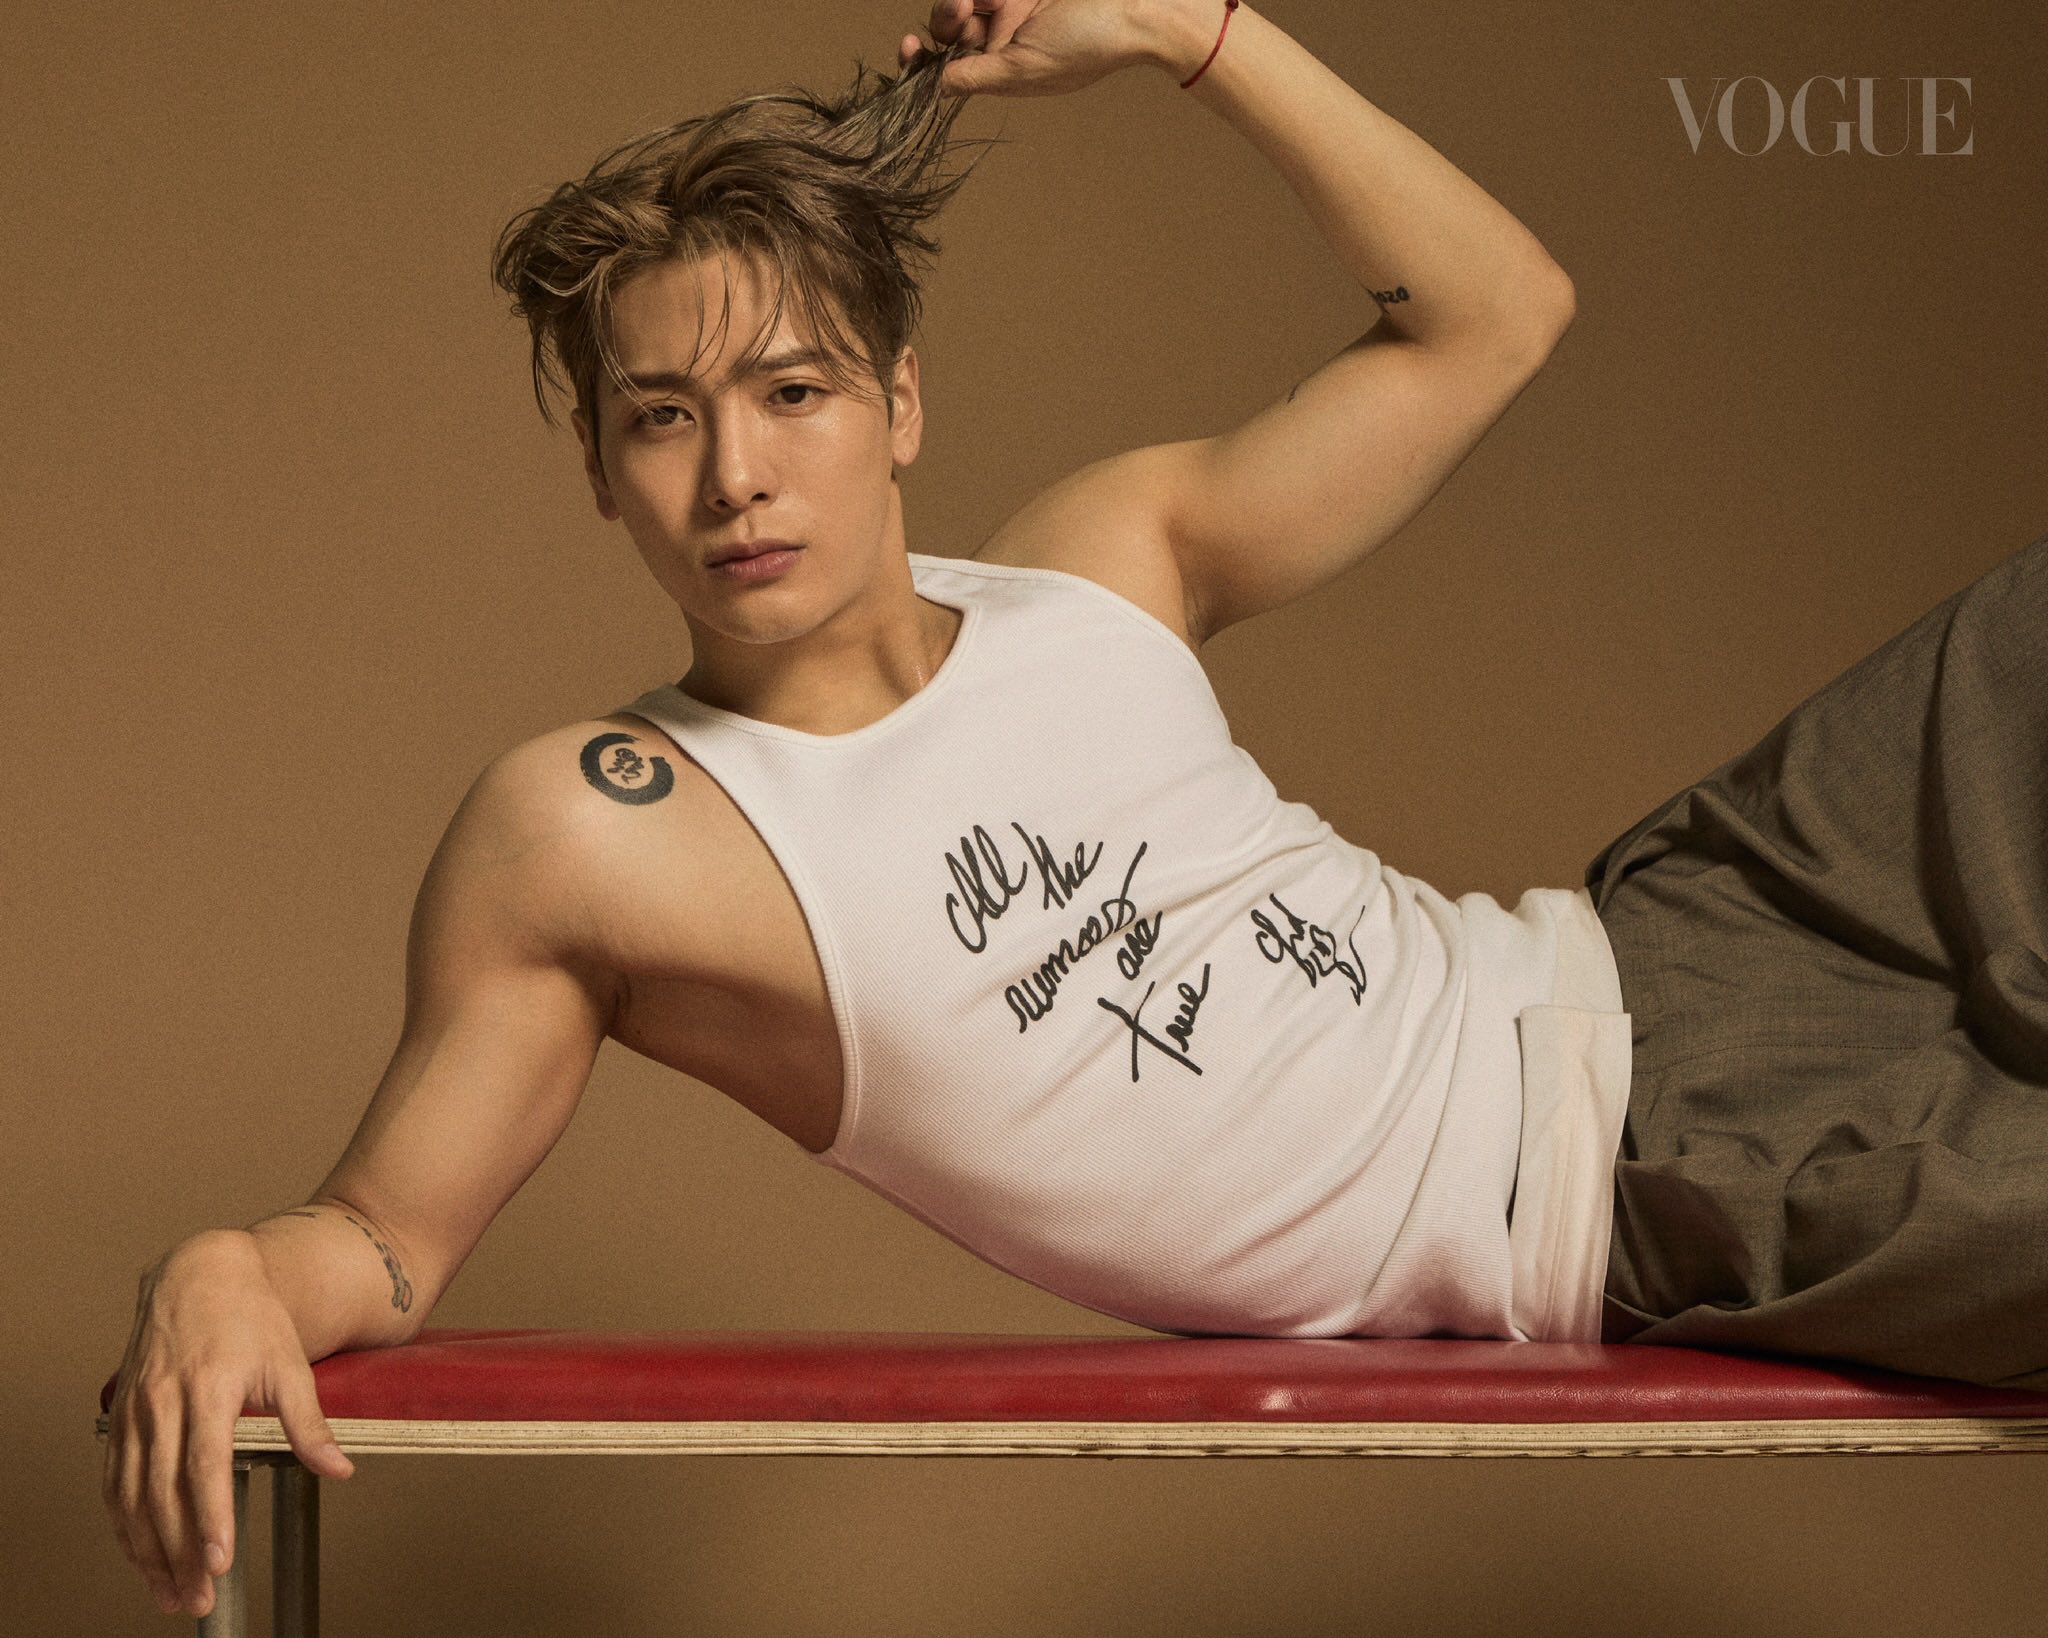 TEAM WANG records on X: Jackson Wang Vogue Singapore's October